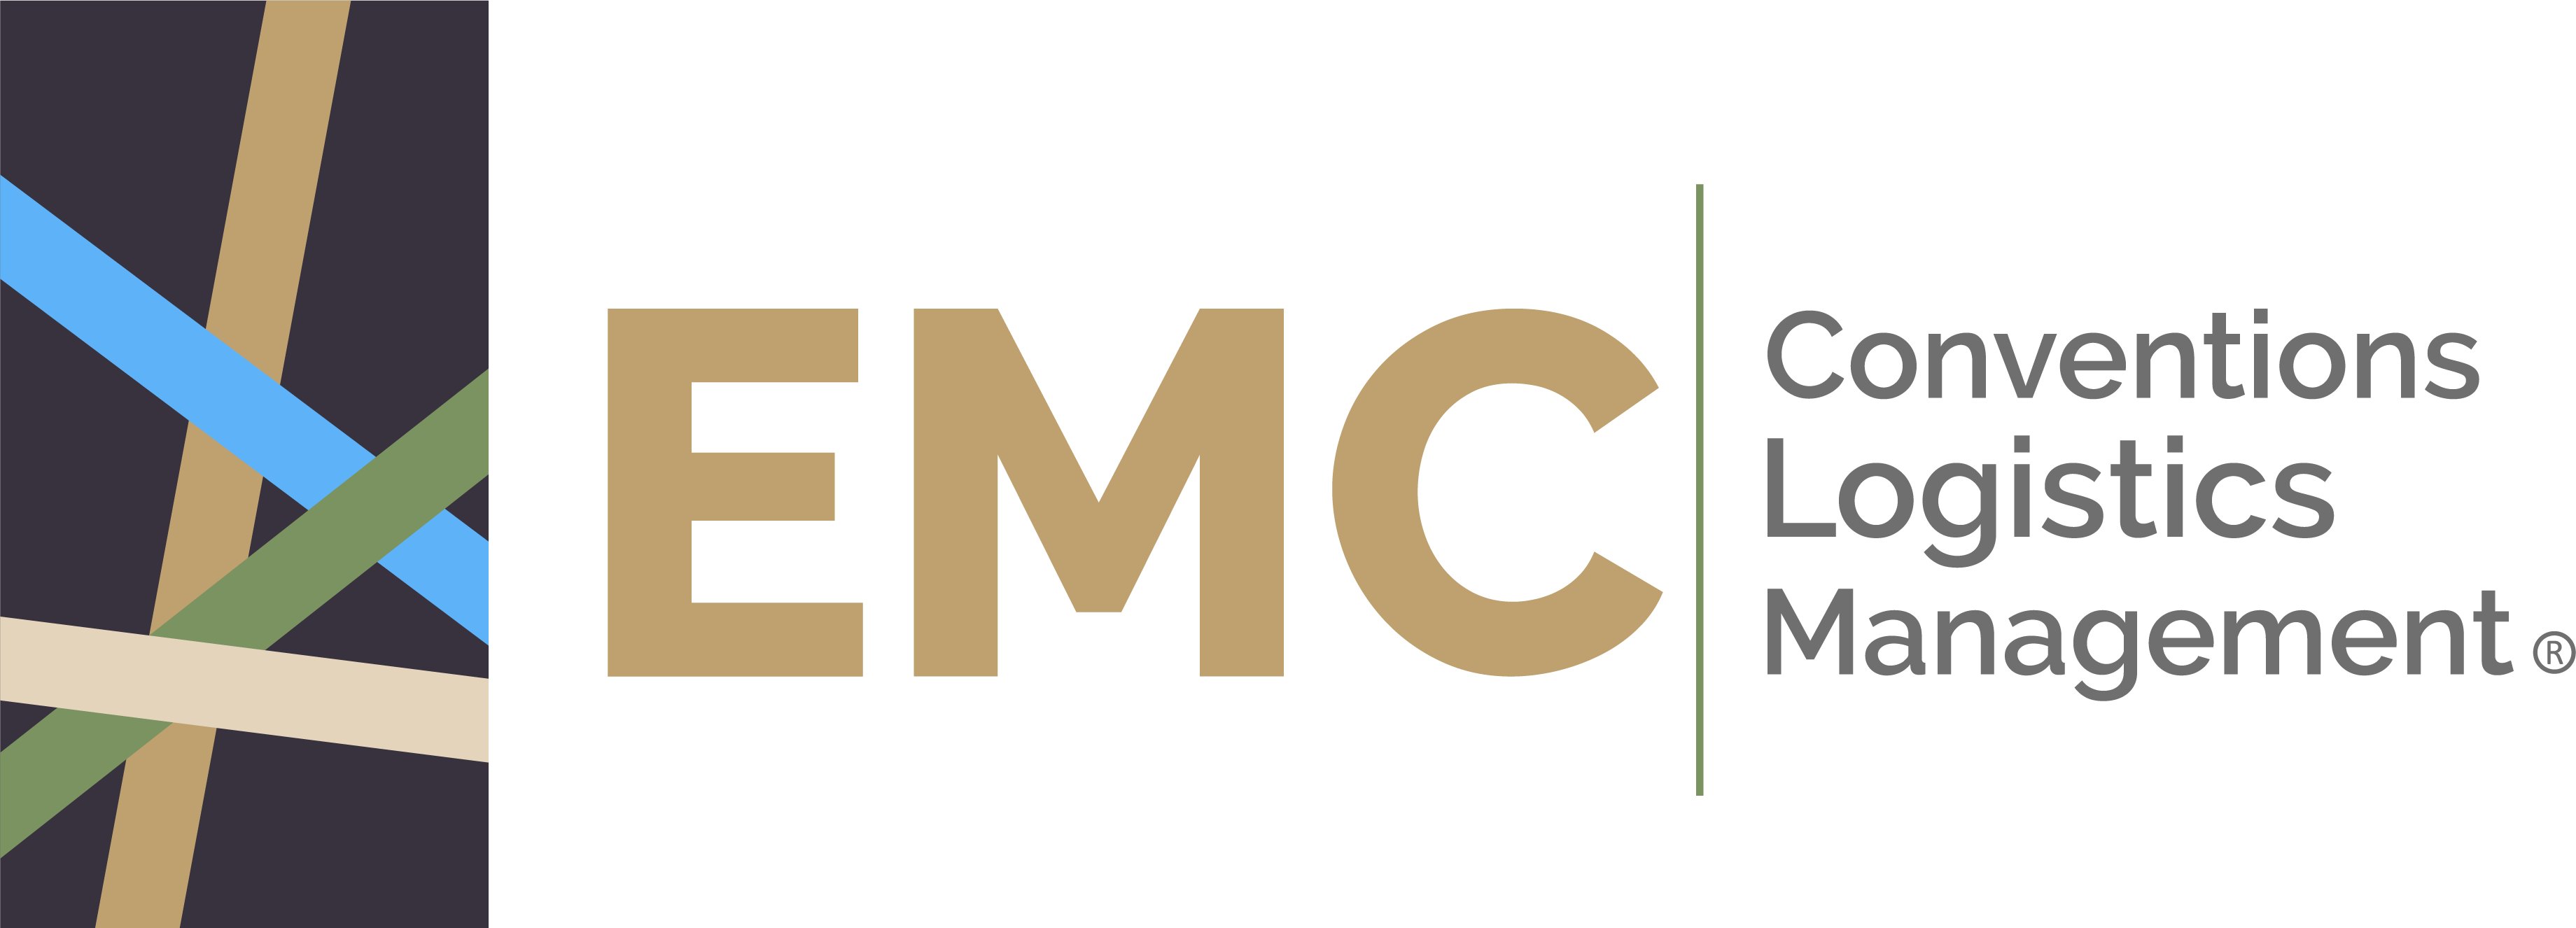 EMC Conventions Logistics Management